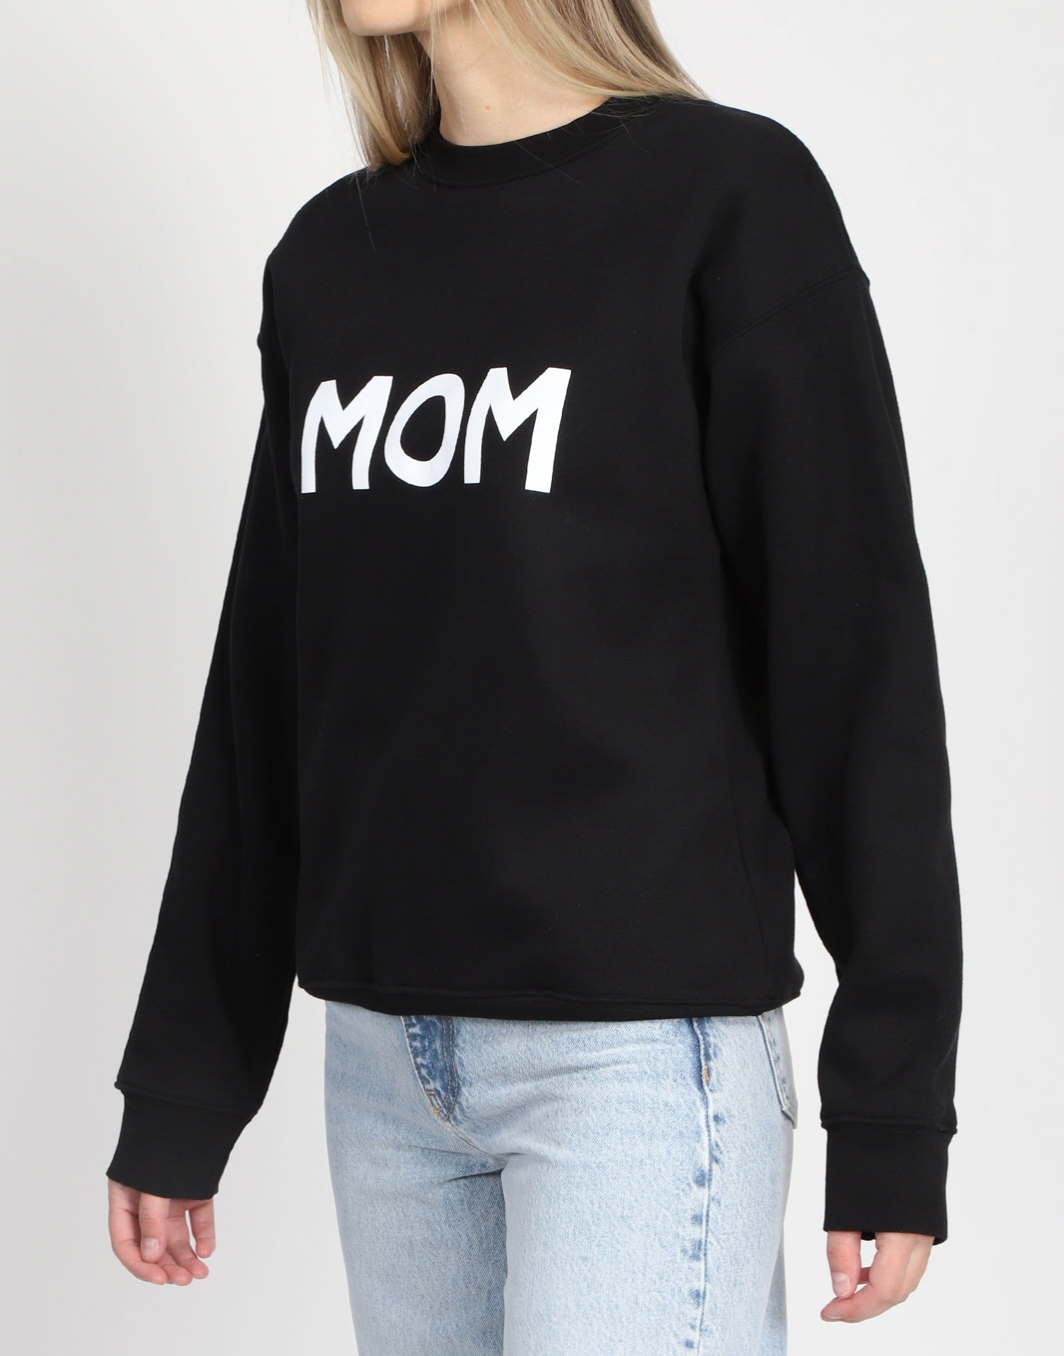 Classic Mom sweater